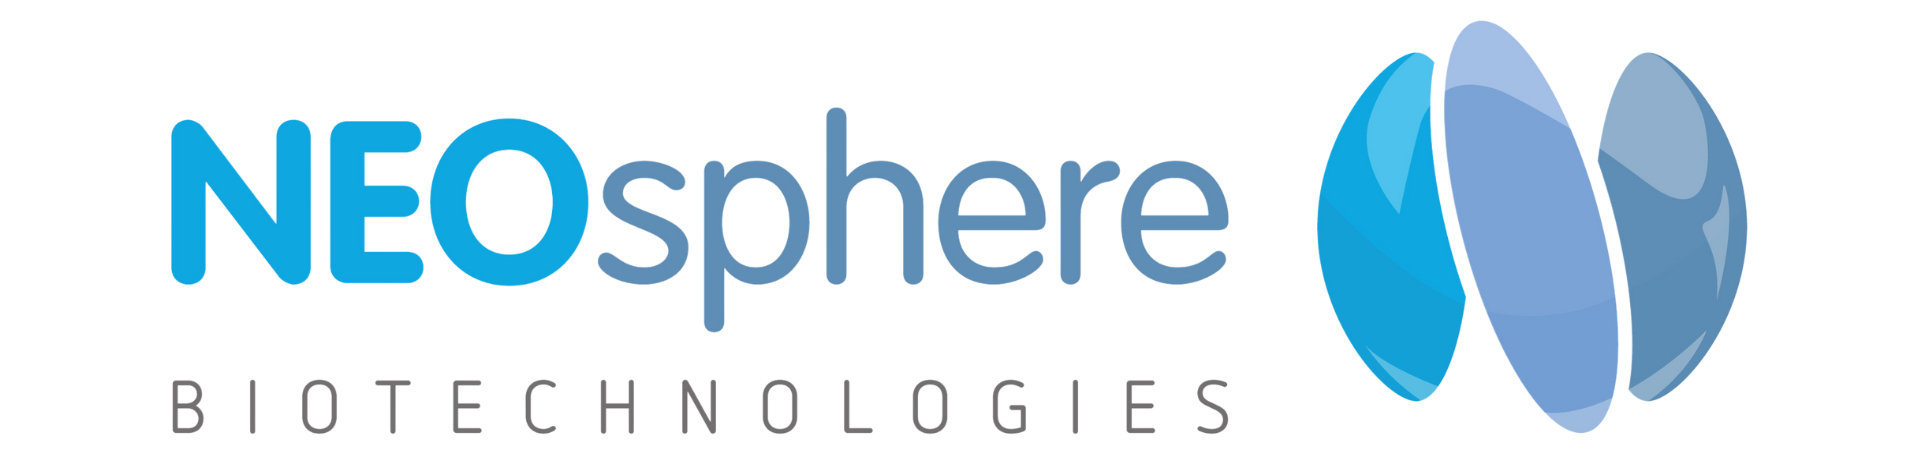 NEOsphere Biotechnologies